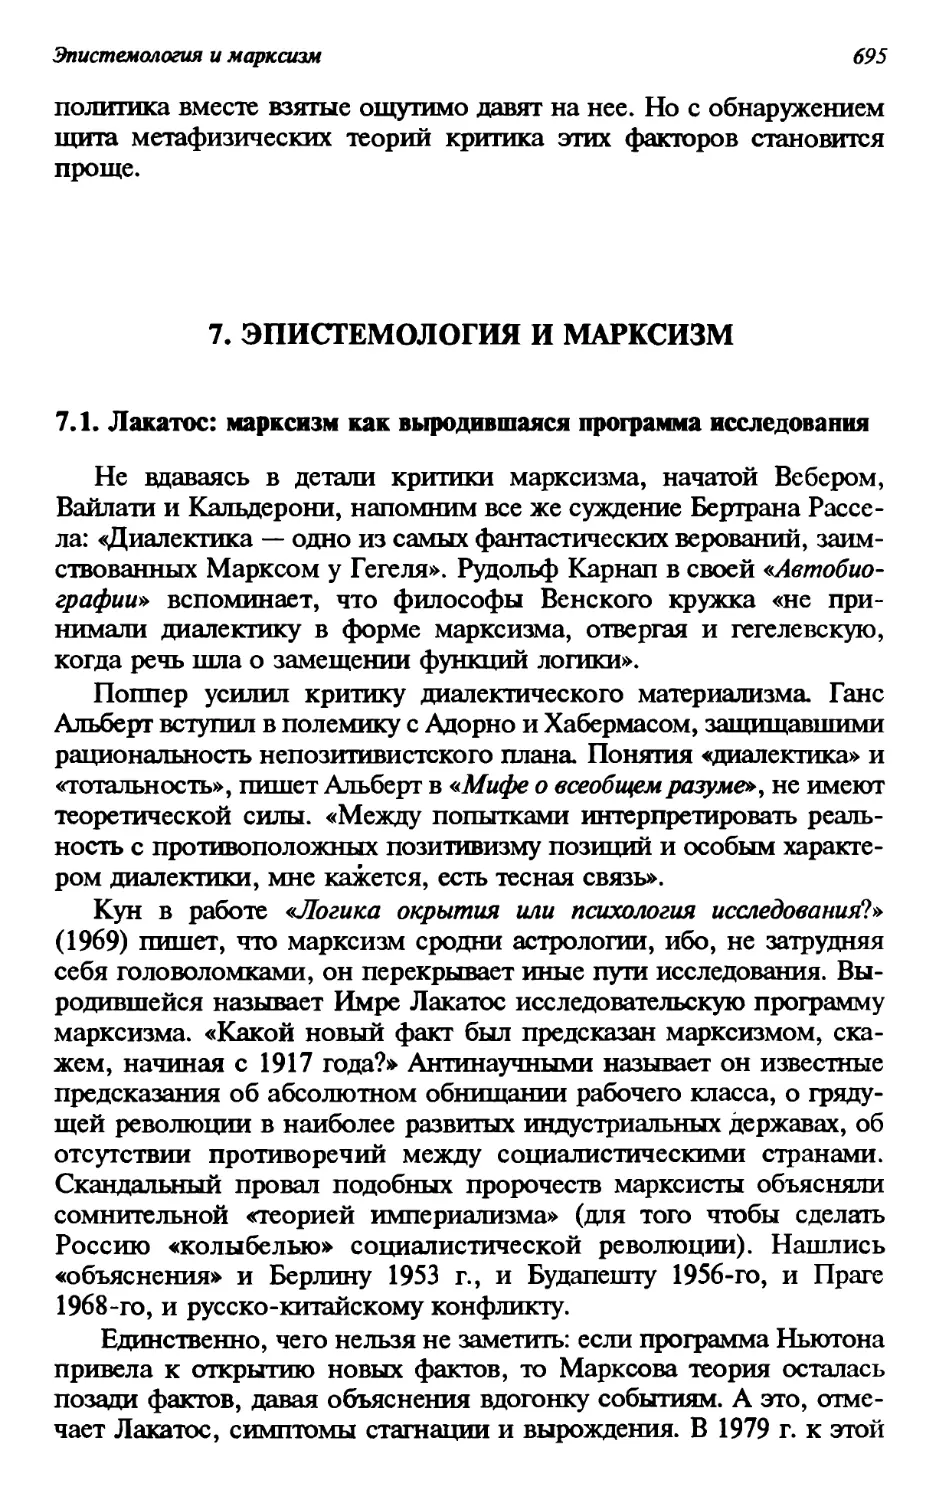 7. Эпистемология и марксизм